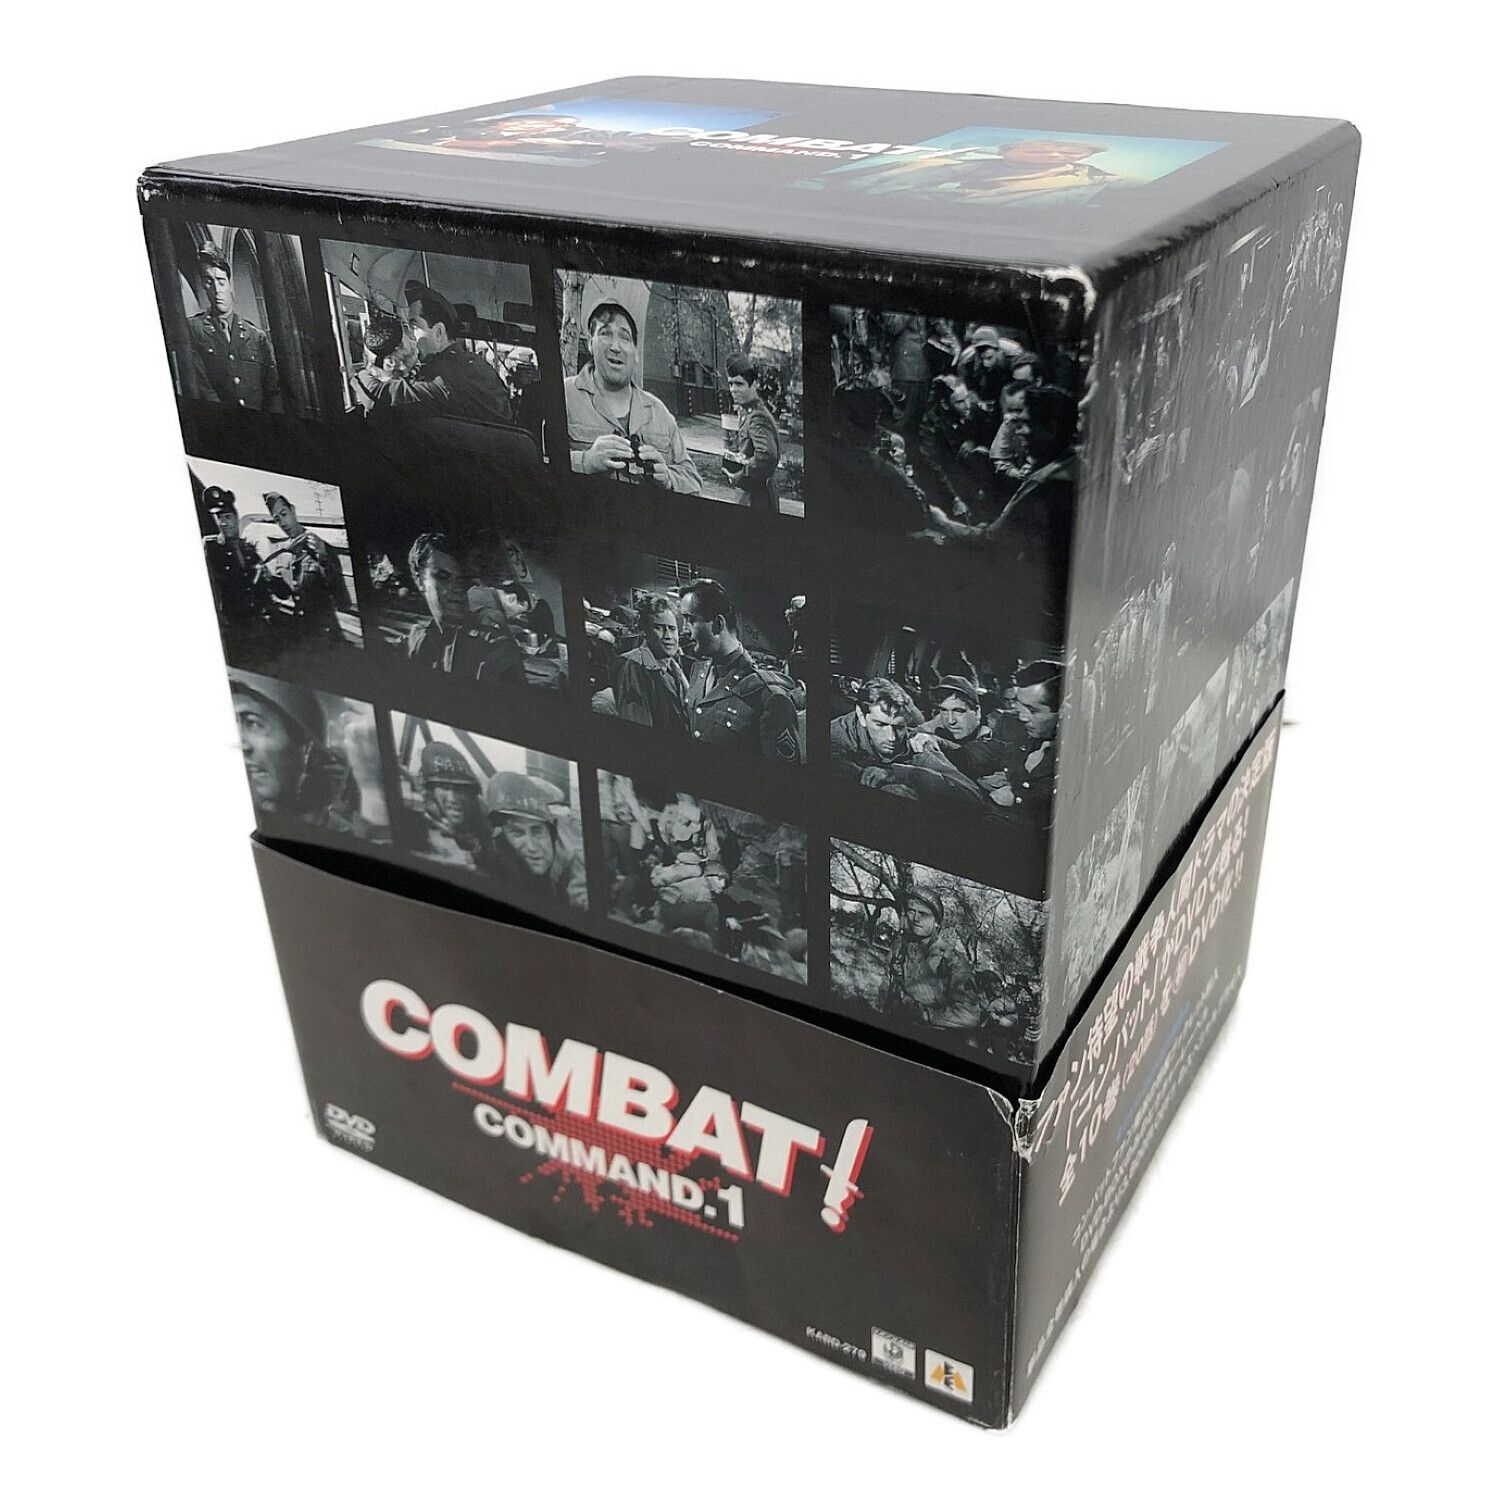 COMBAT!(カラー版)DVD-BOX